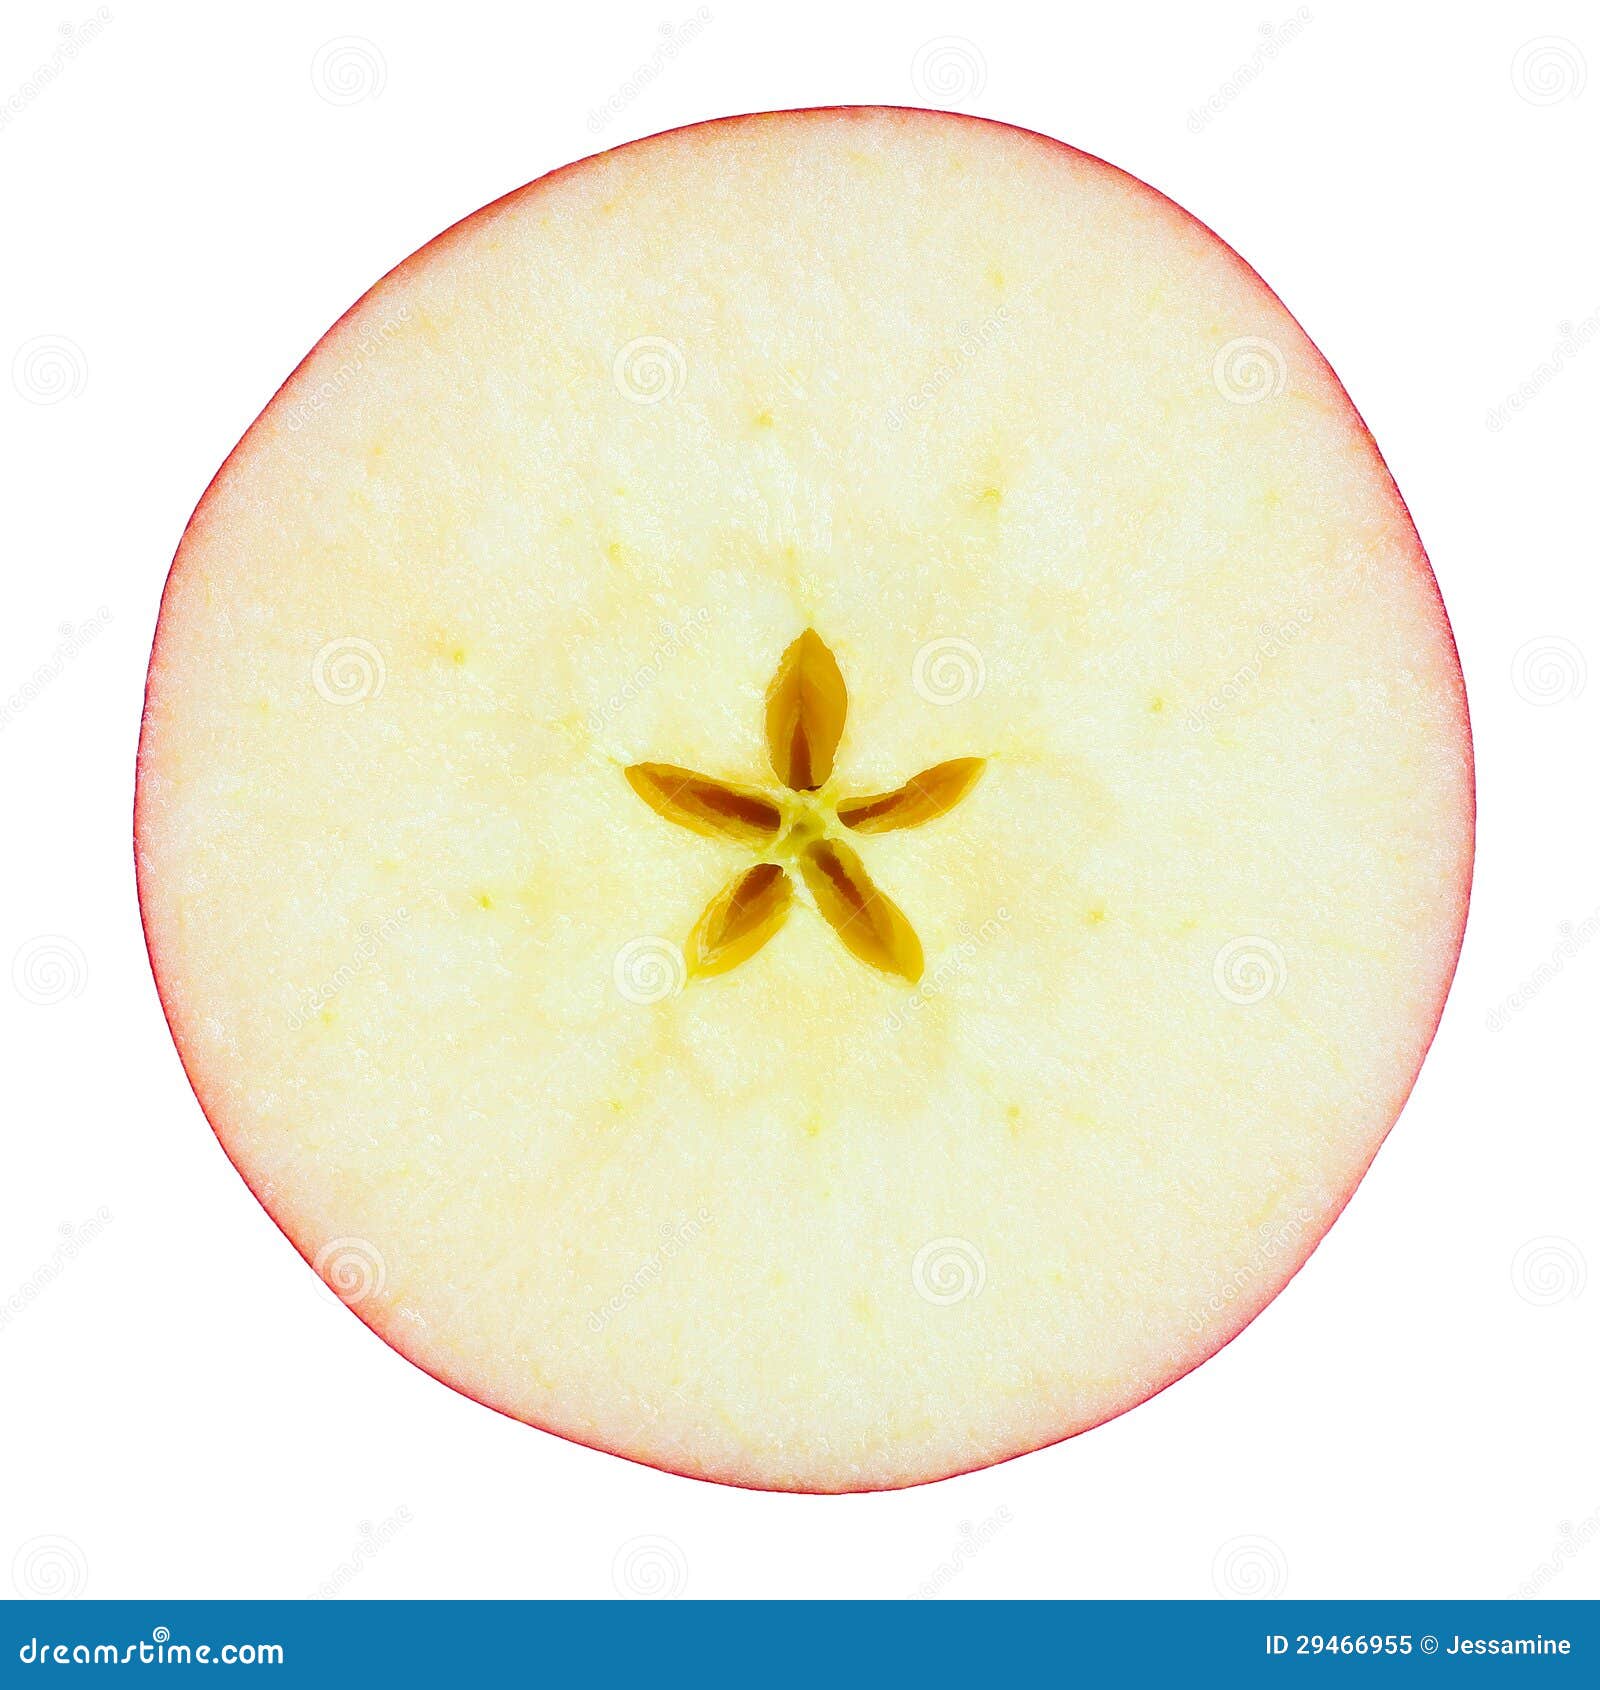 Apple slice stock image. Image of apple, circle, isolated - 29466955